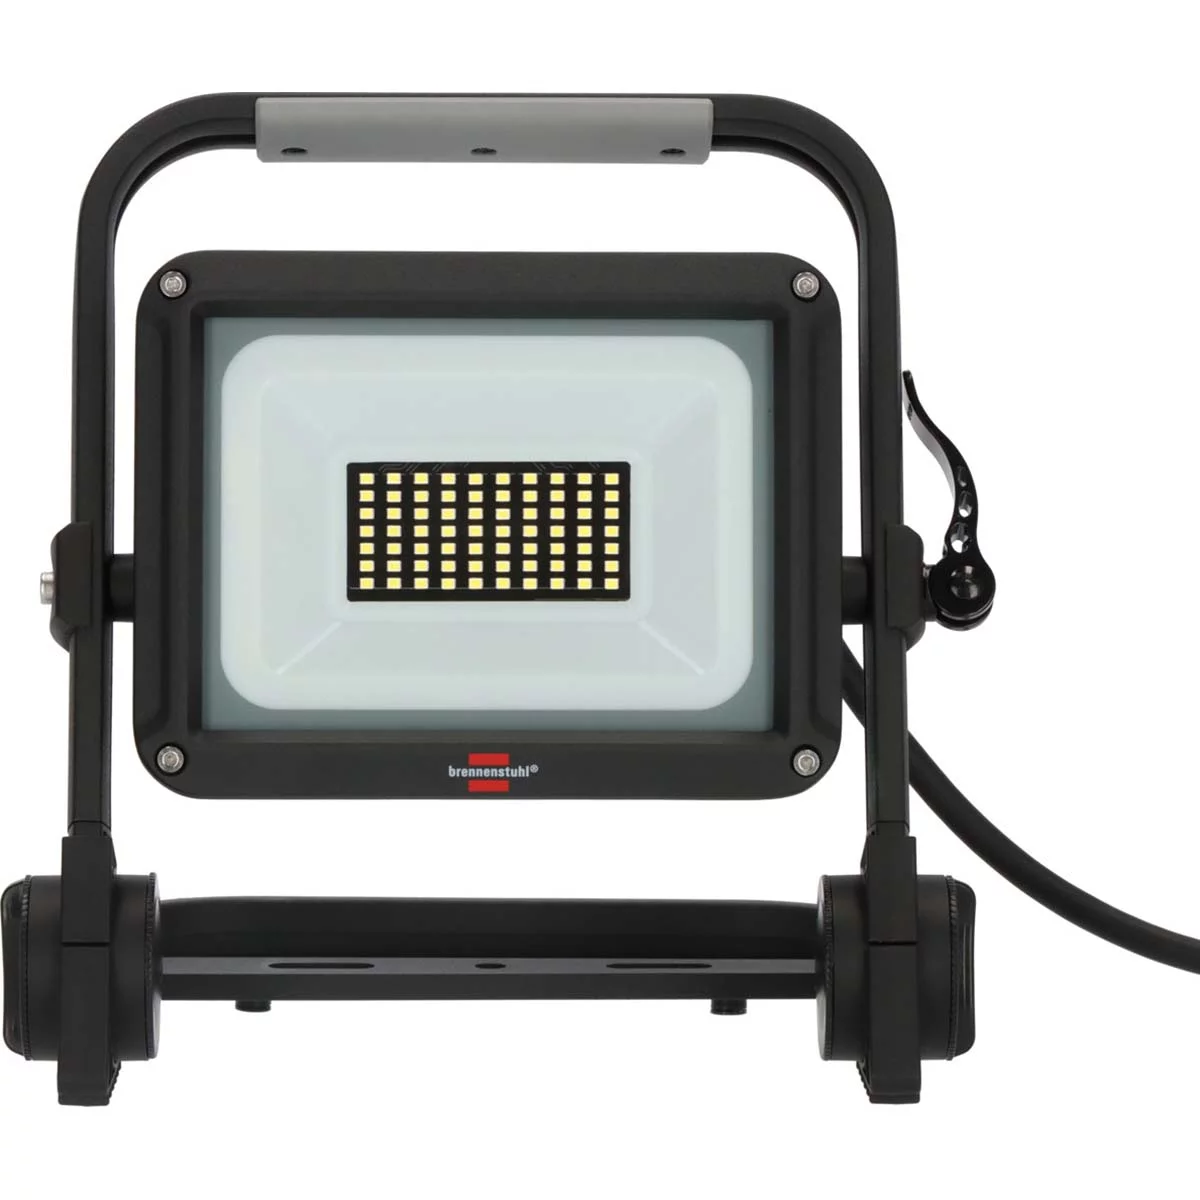 Mobile LED-Bauleuchte JARO 4060 M, 30W - Brennenstuhl